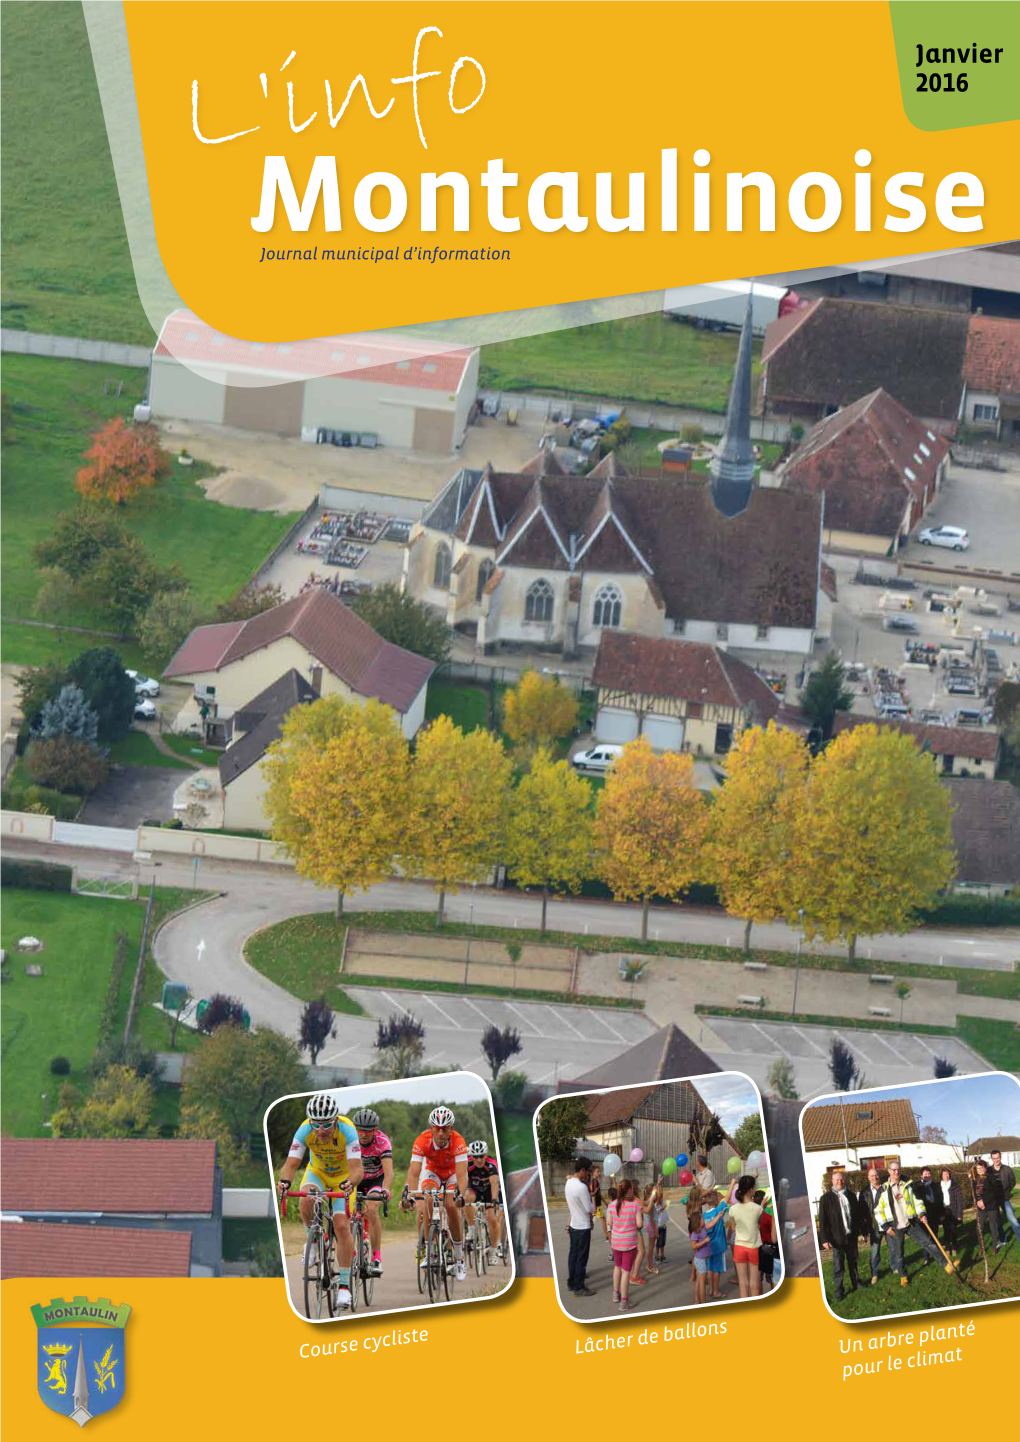 Montaulinoise Journal Municipal D’Information